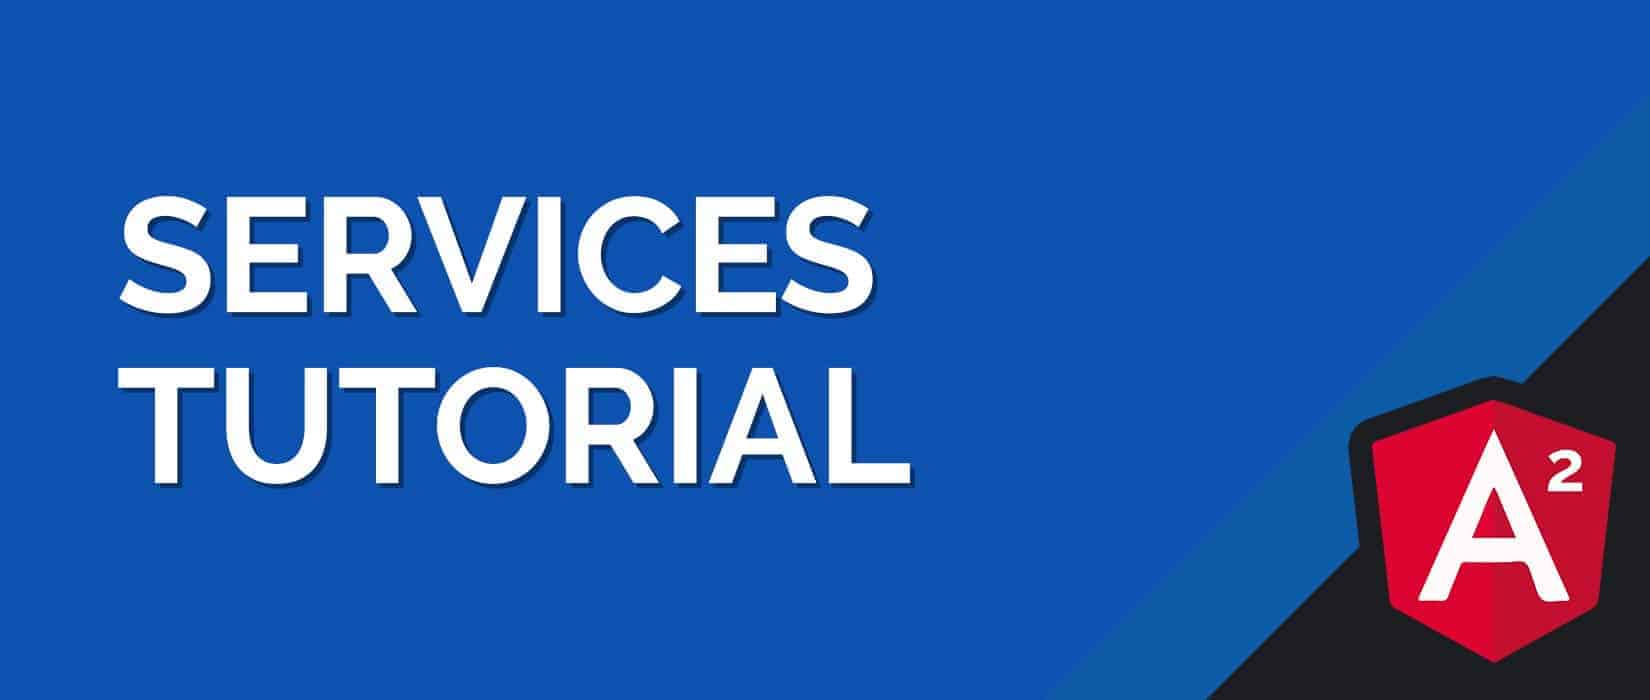 Angular 2 Services Video Tutorial